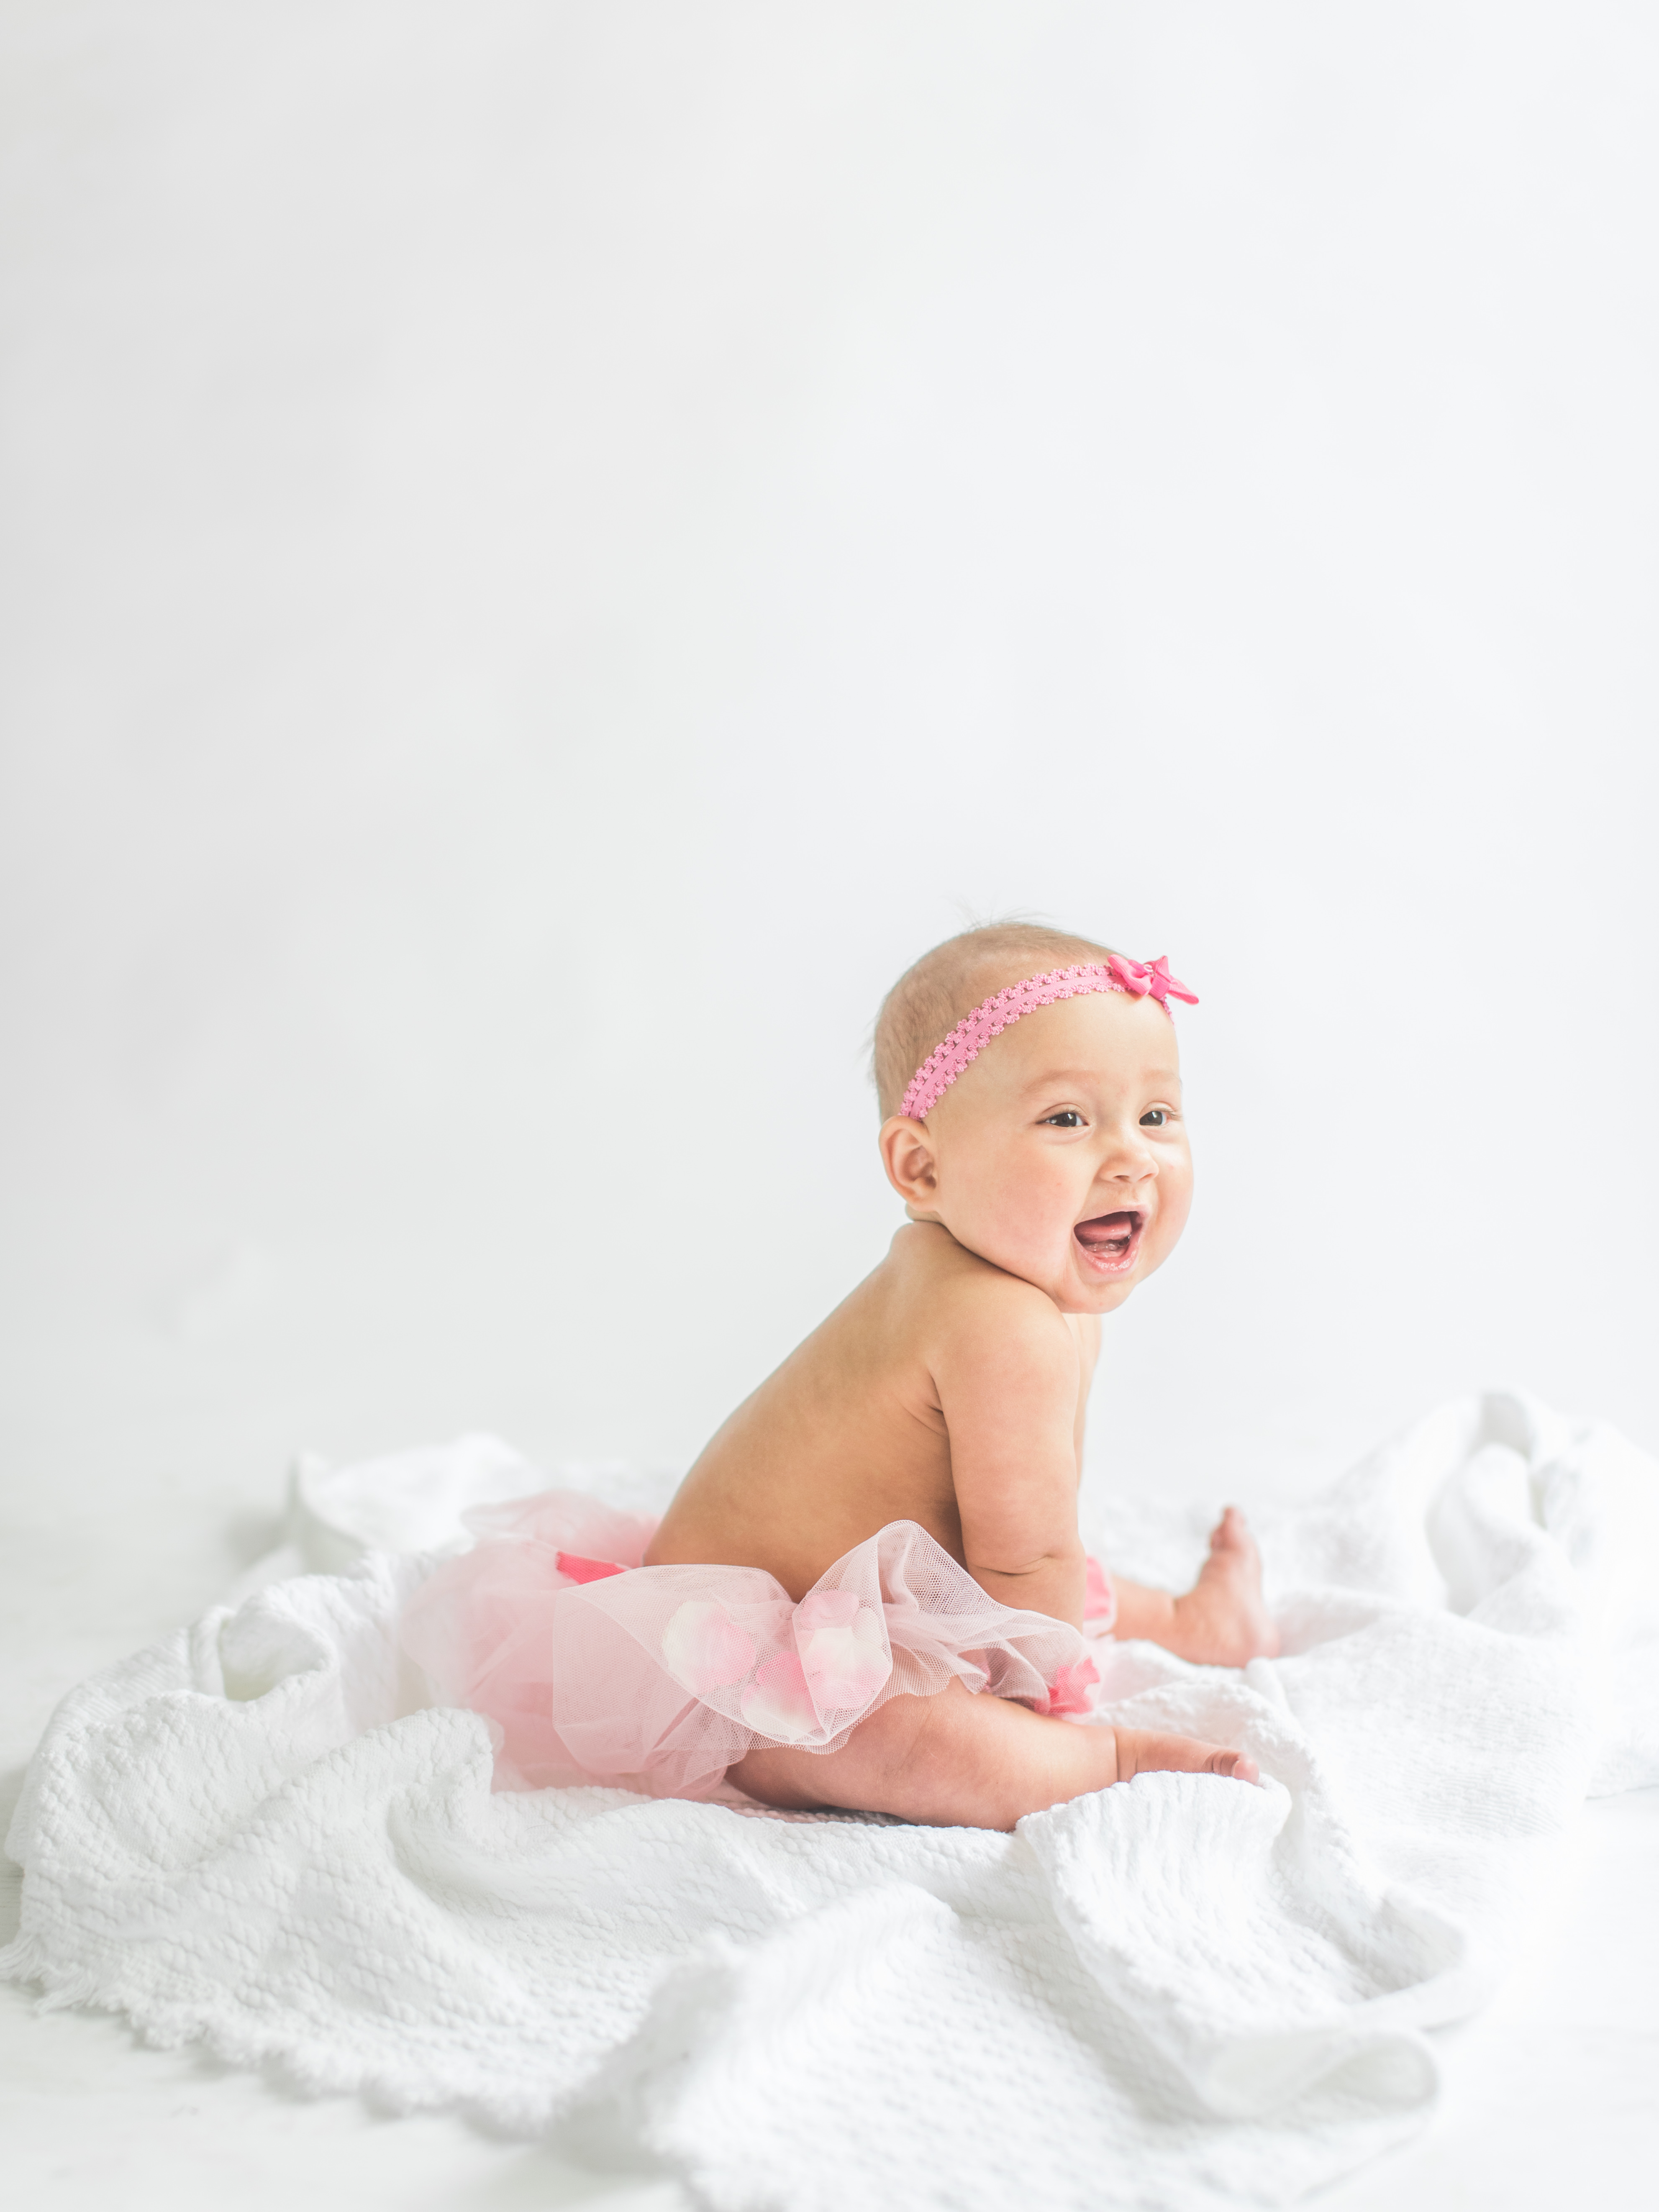 baby girl in pink tu-tu studio charlotte nc photographer 6 months